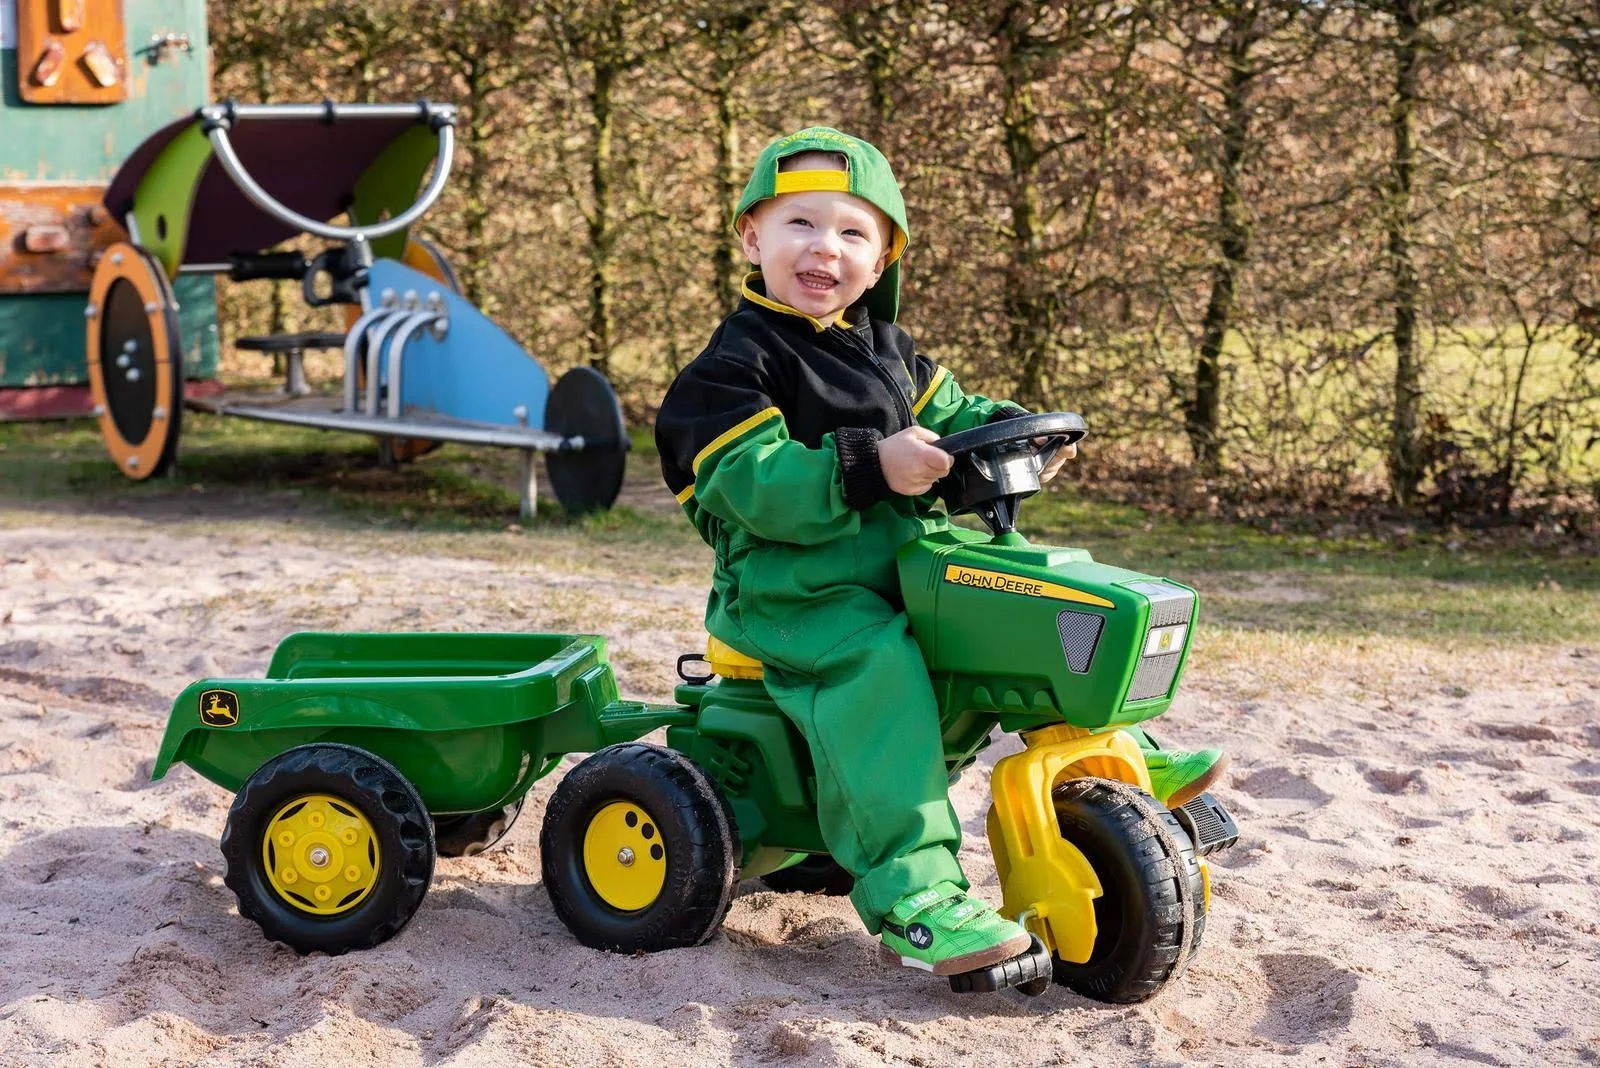 Toys John Deere 3-Wheel Trac with Trailer Ride On, Green/Yellow